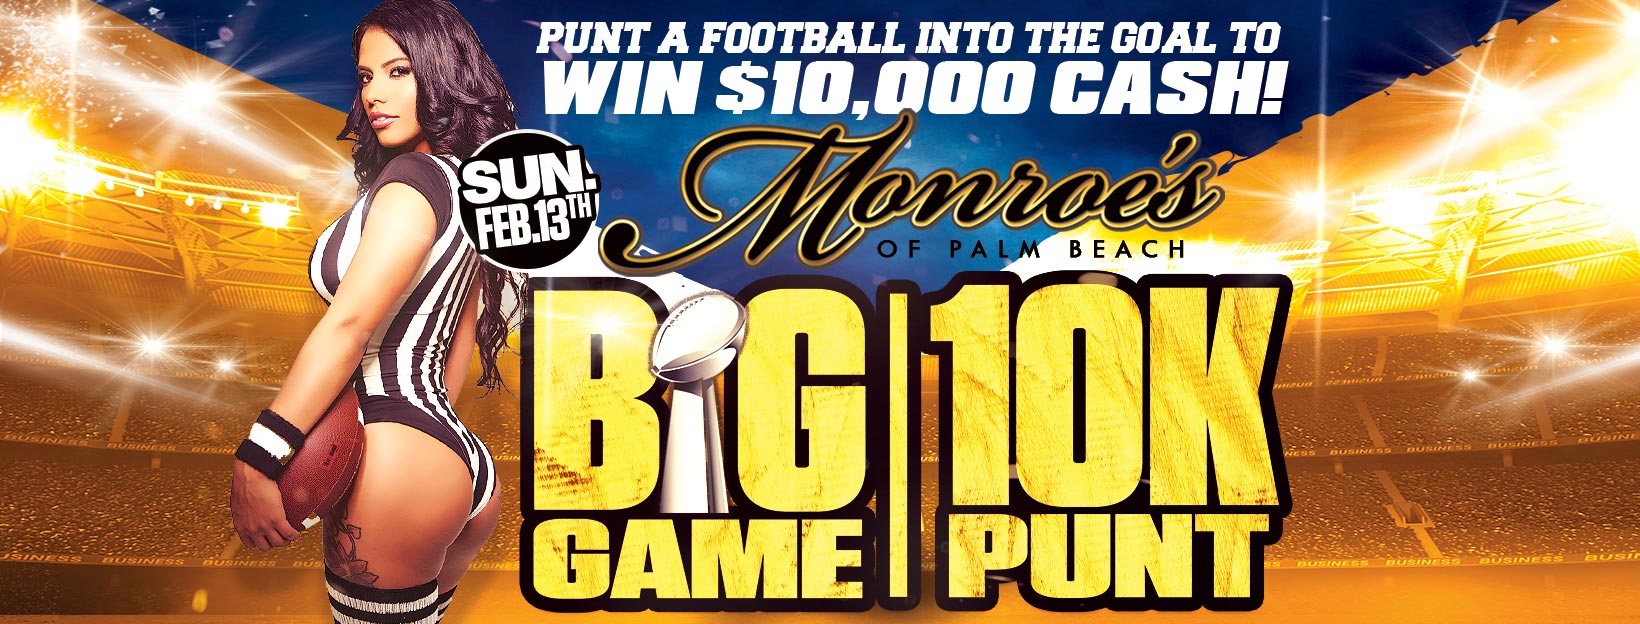 Monroe's The Big Game 10k Punt